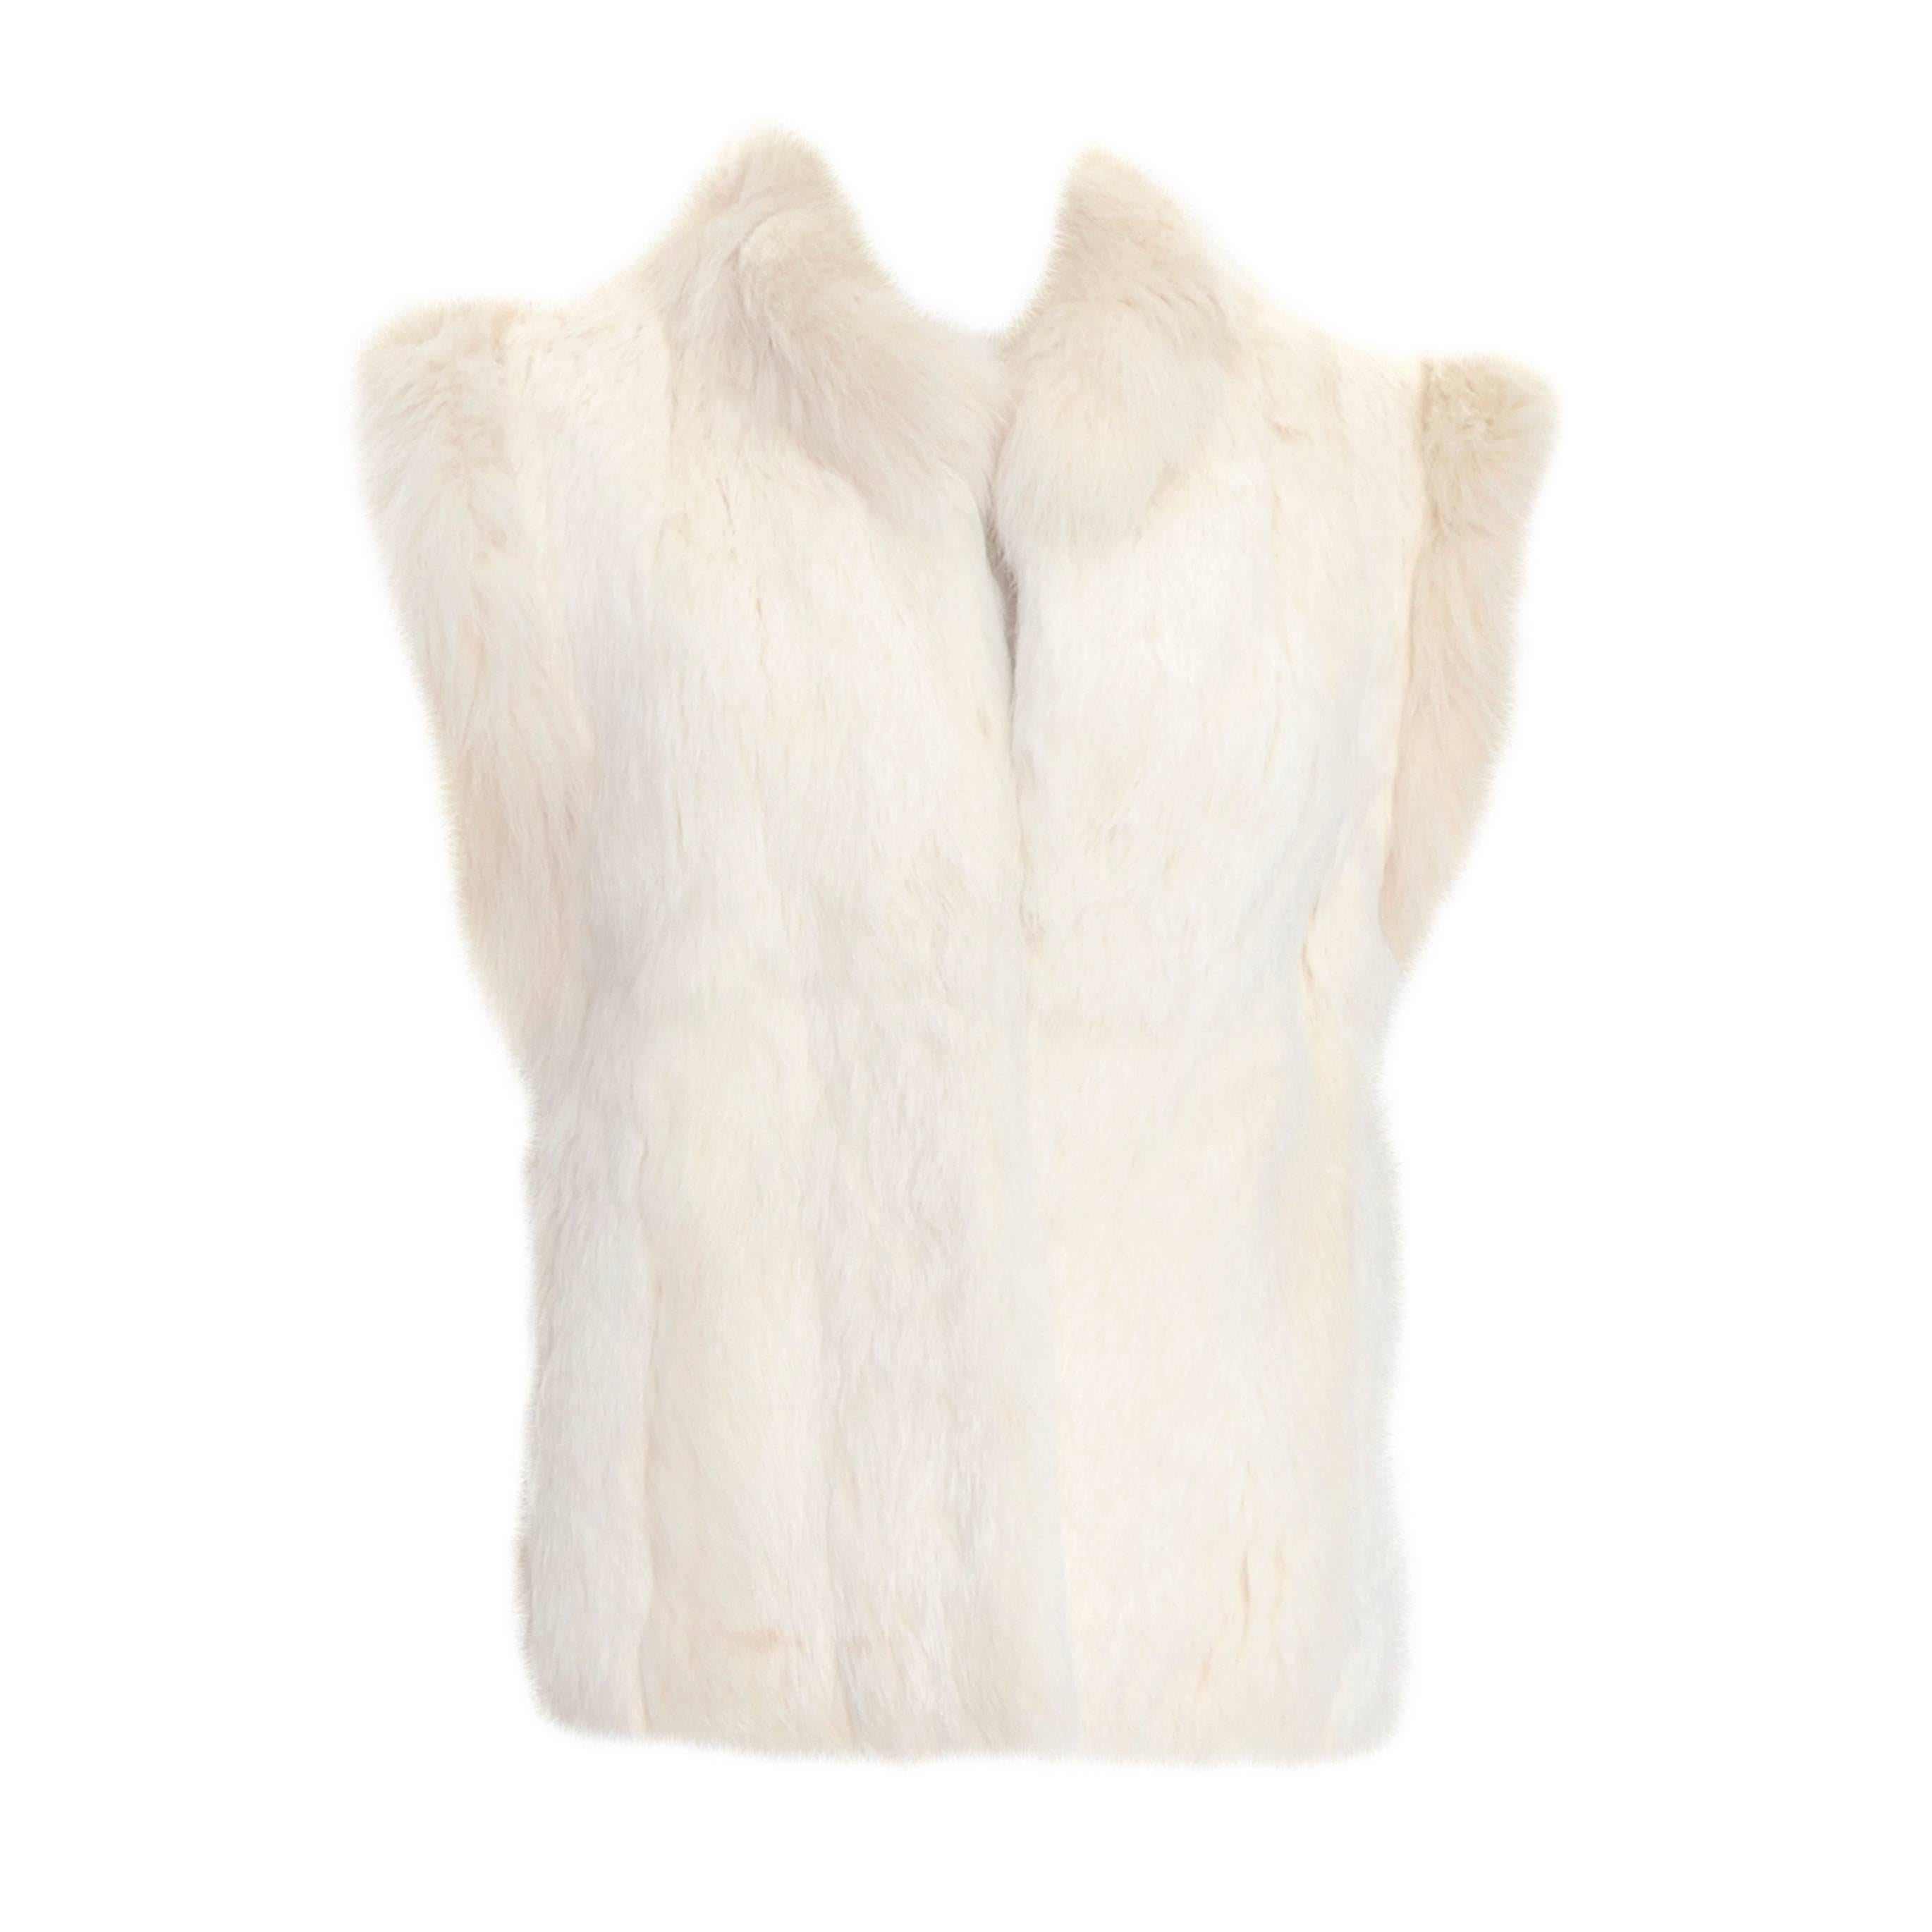 1980s Vintage Ivory Winter White Rabbit Fur Vest With Satin Lining